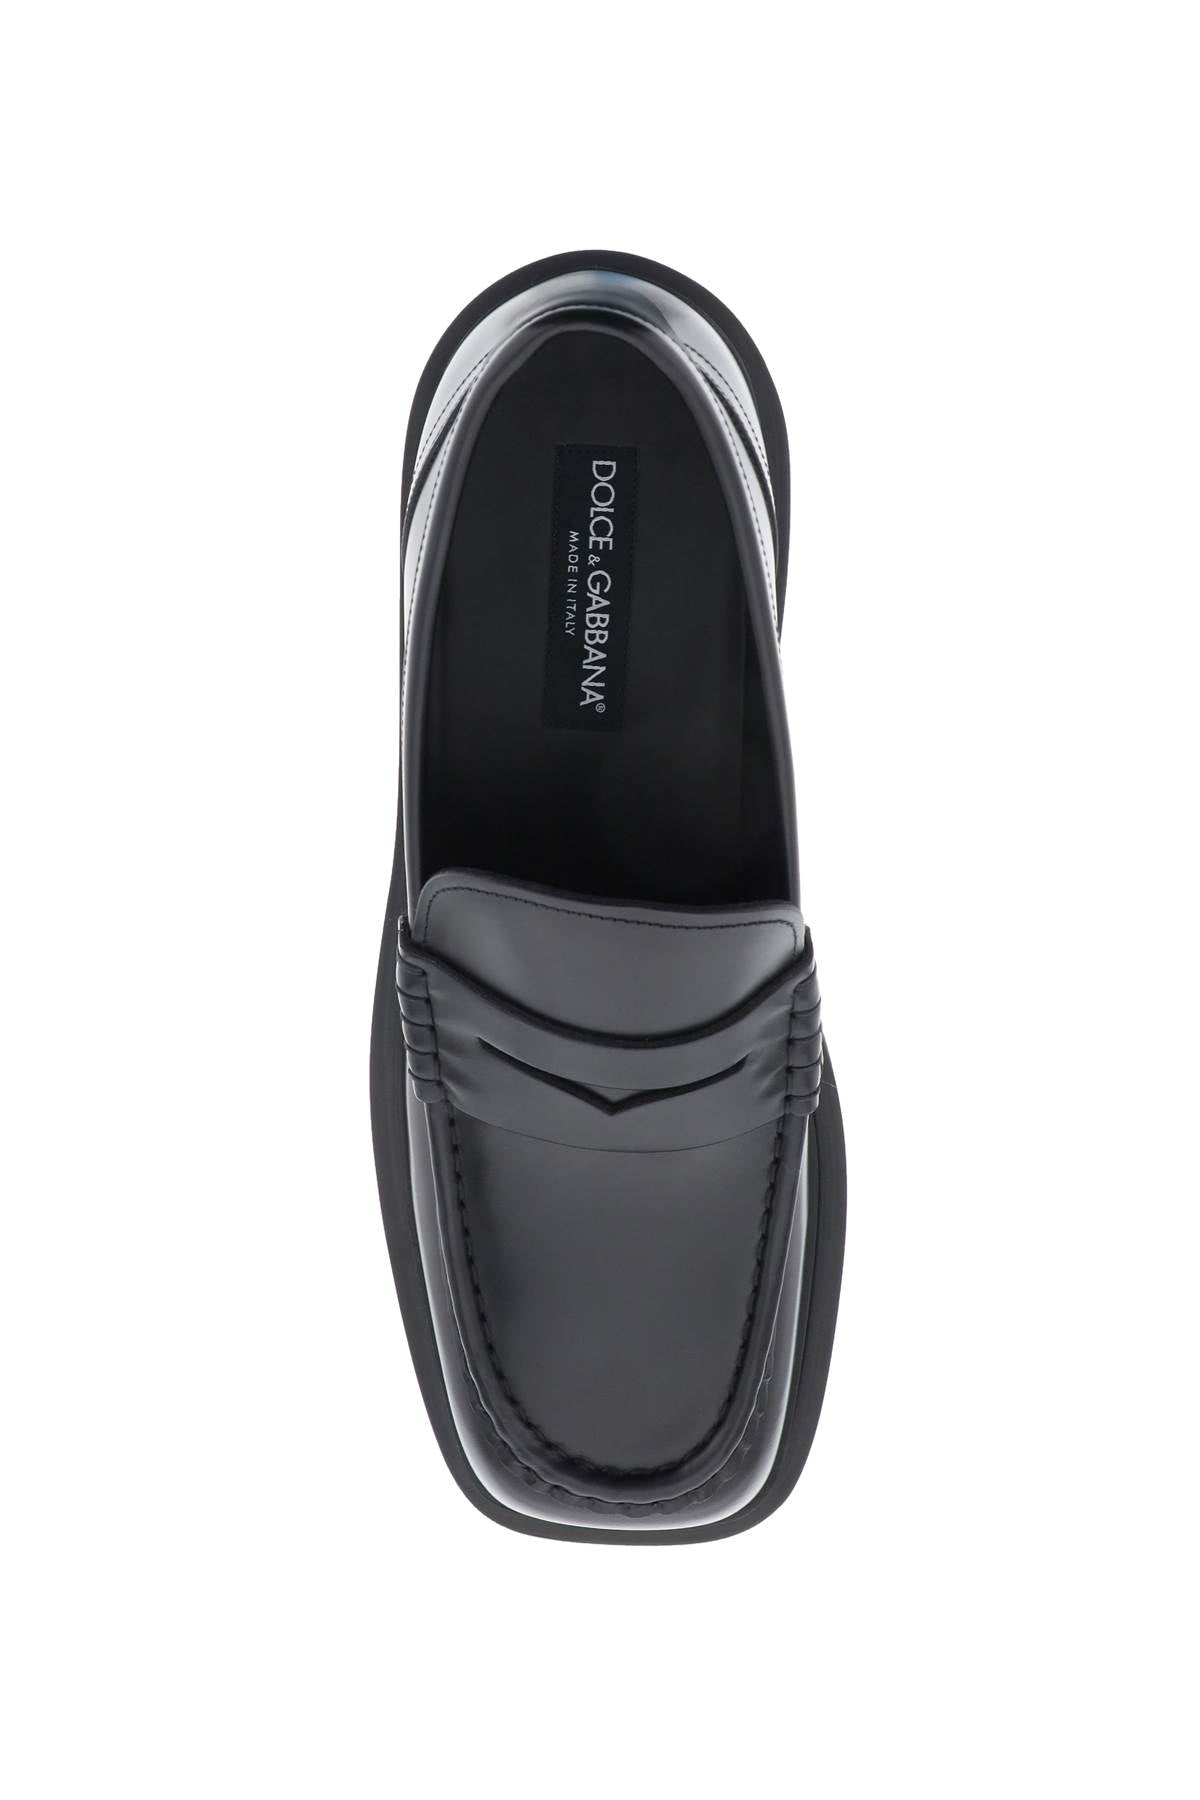 Dolce & Gabbana Dolce & gabbana brushed leather loafers